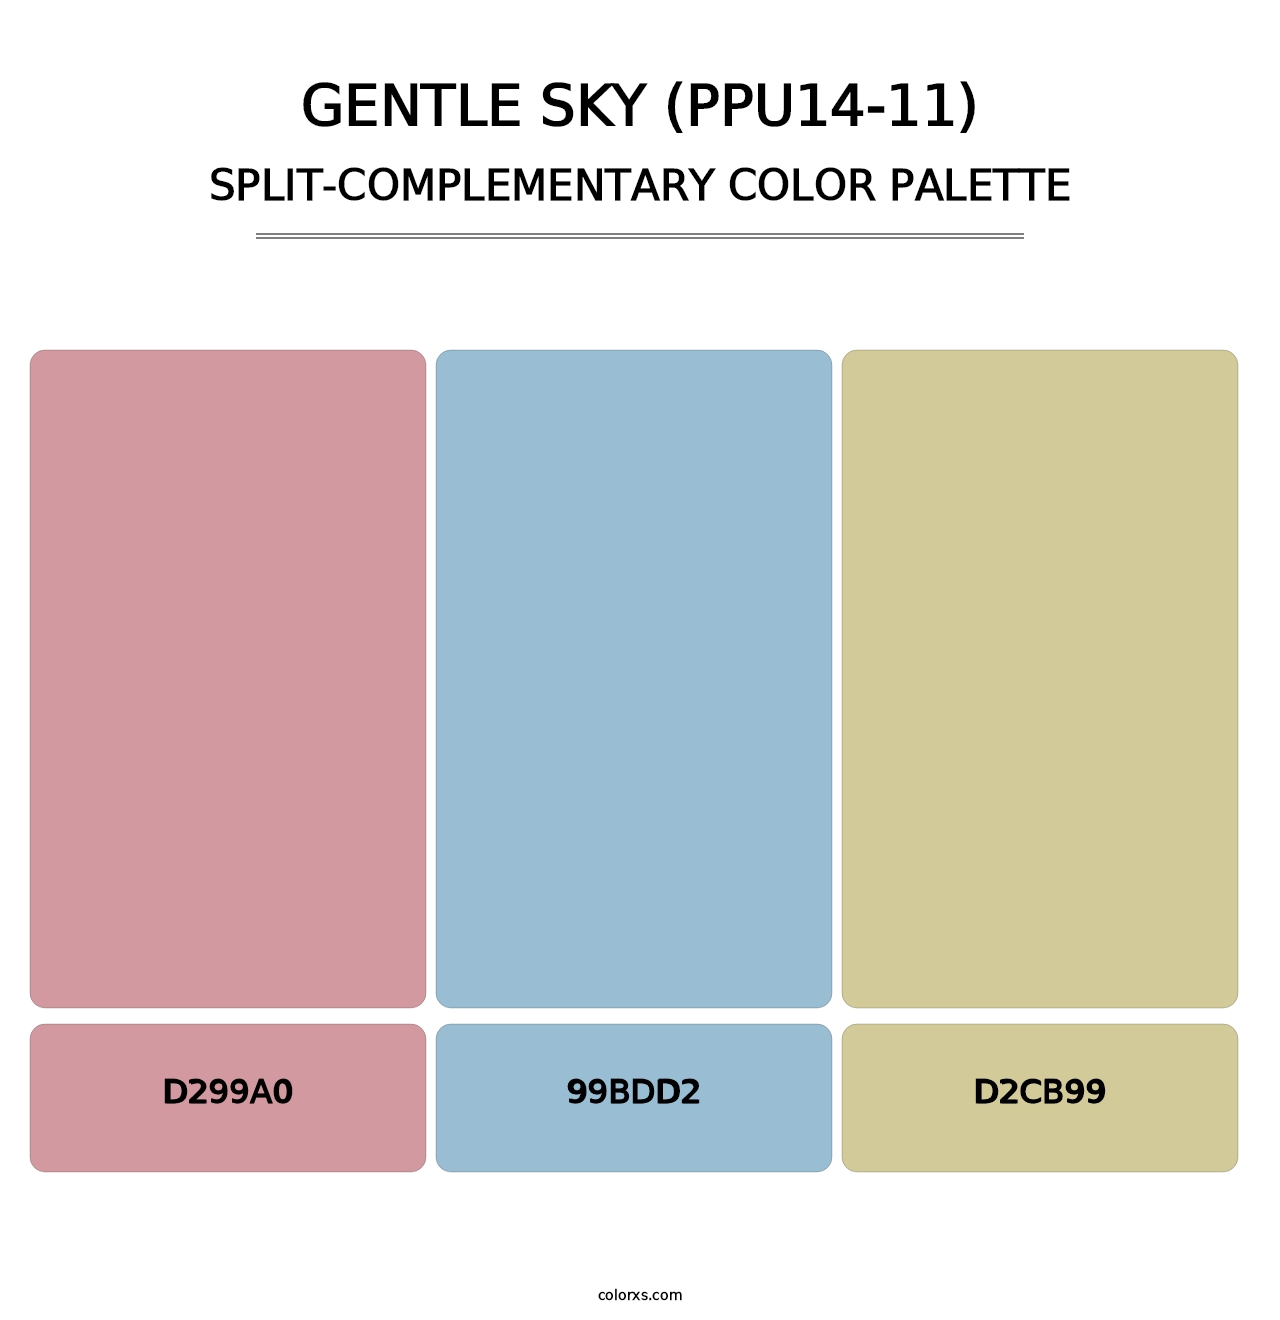 Gentle Sky (PPU14-11) - Split-Complementary Color Palette